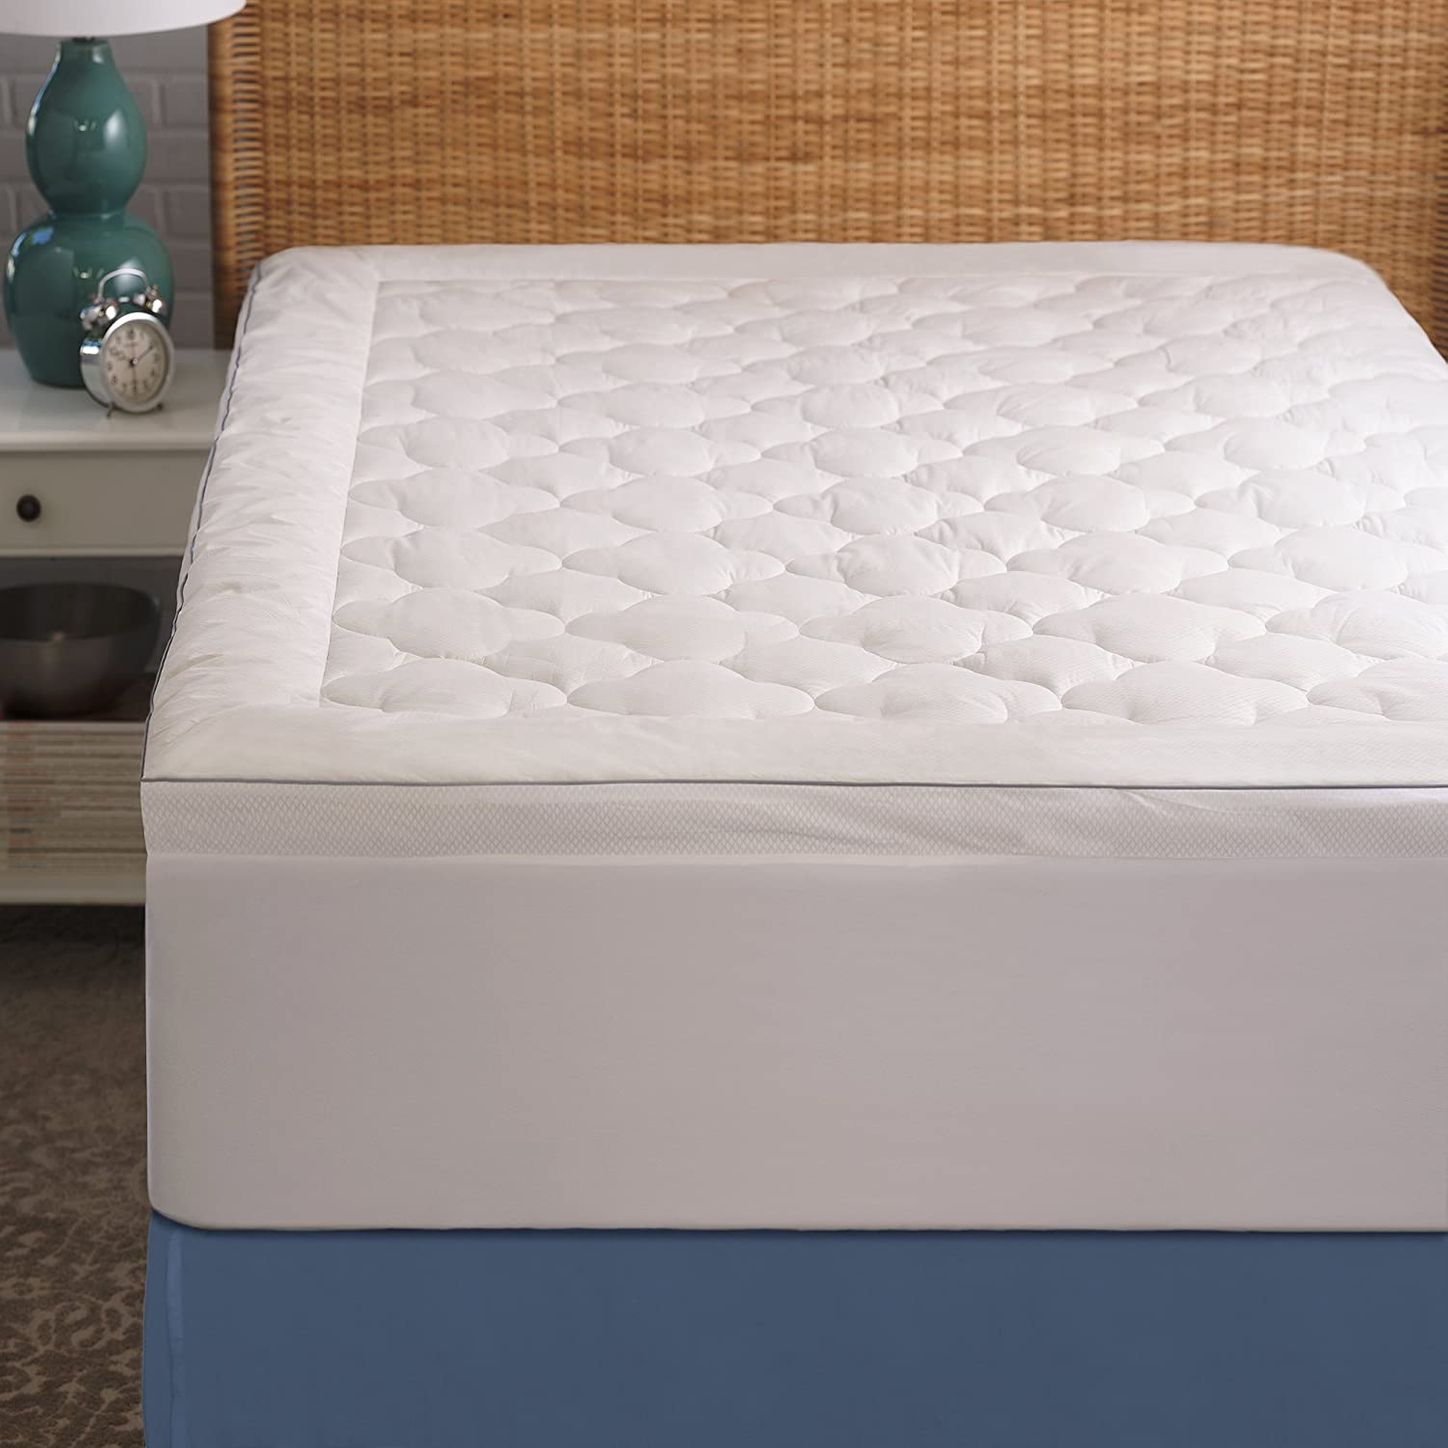 ghostbed mattress-twin xl 11 inch-cooling gel memory foam-mattress in a box